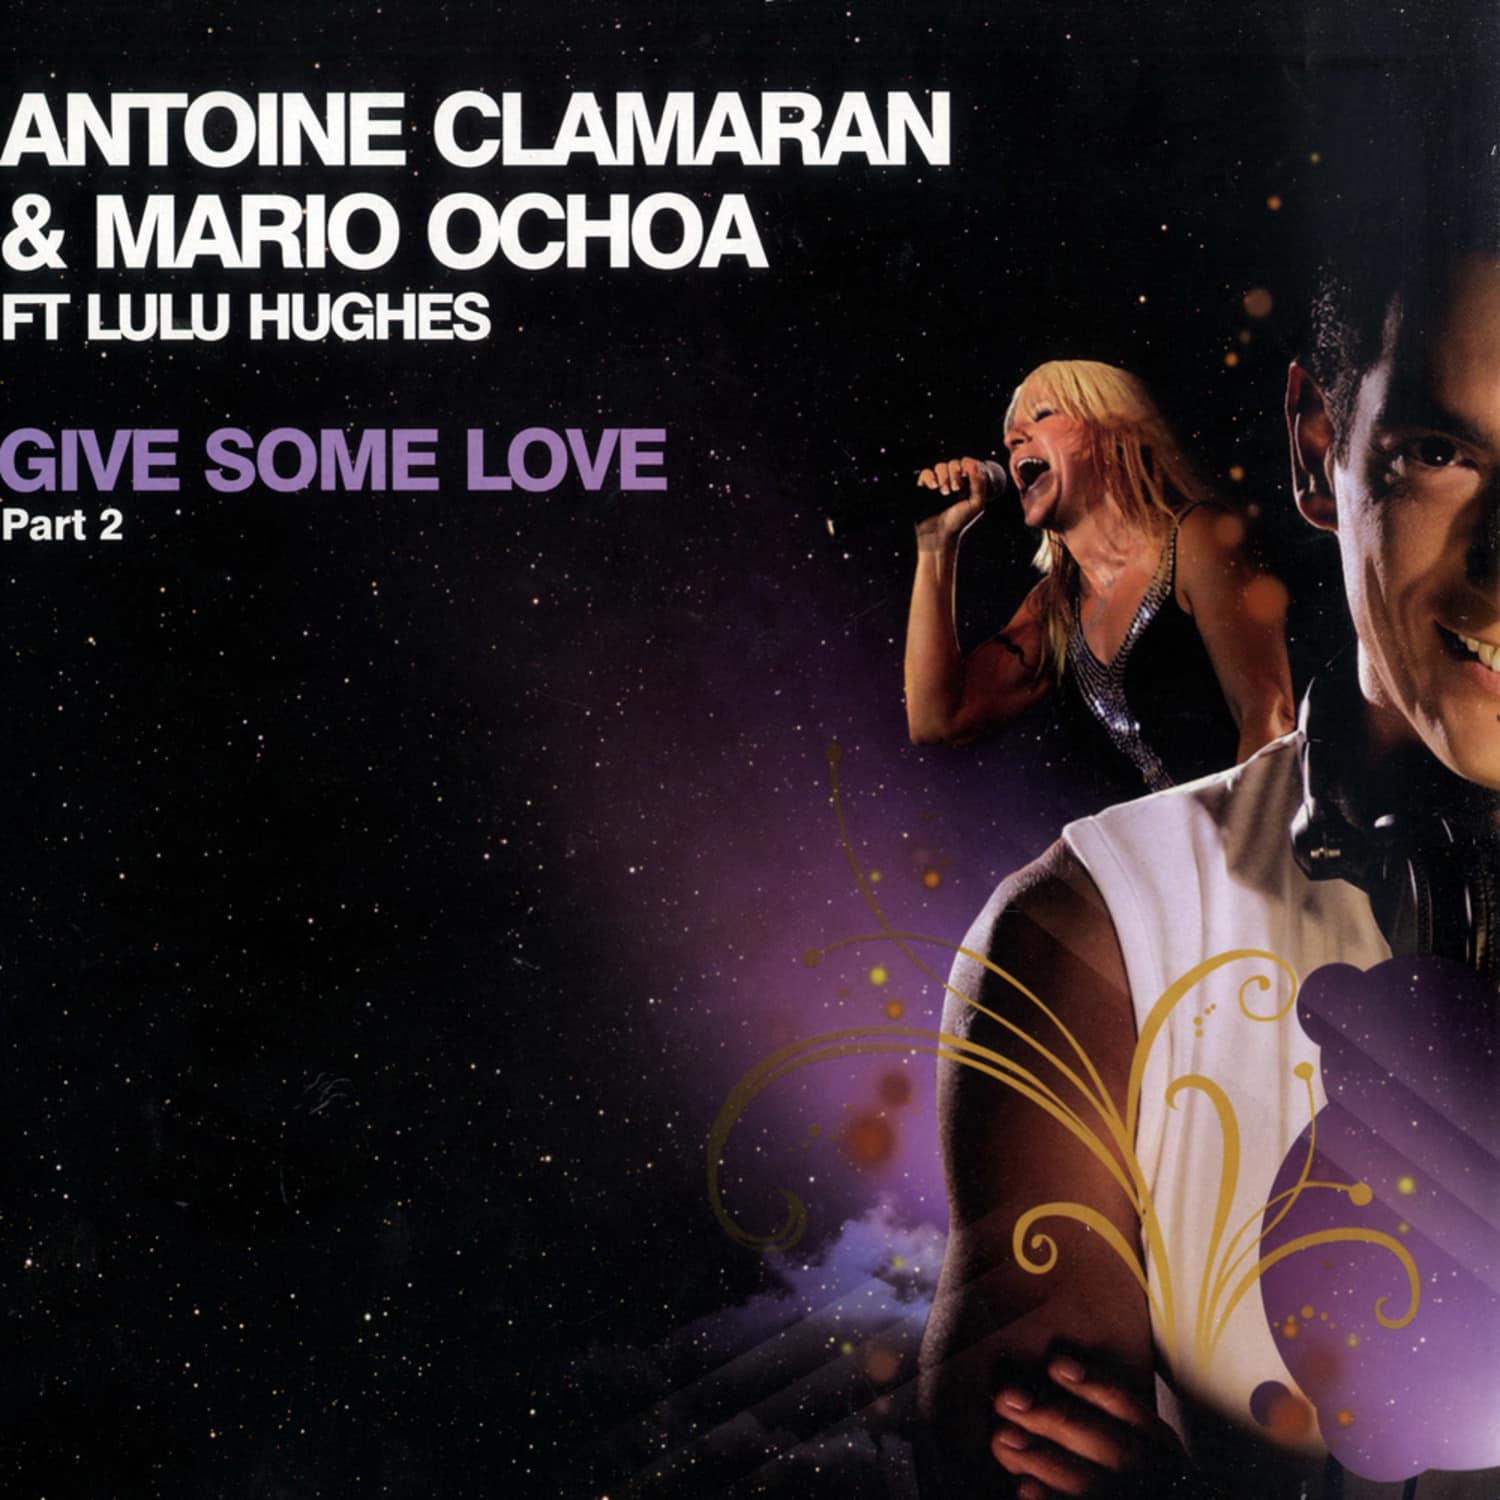 Antoine Clamaran & Mario Ochoa - GIME SOME LOVE PART 2